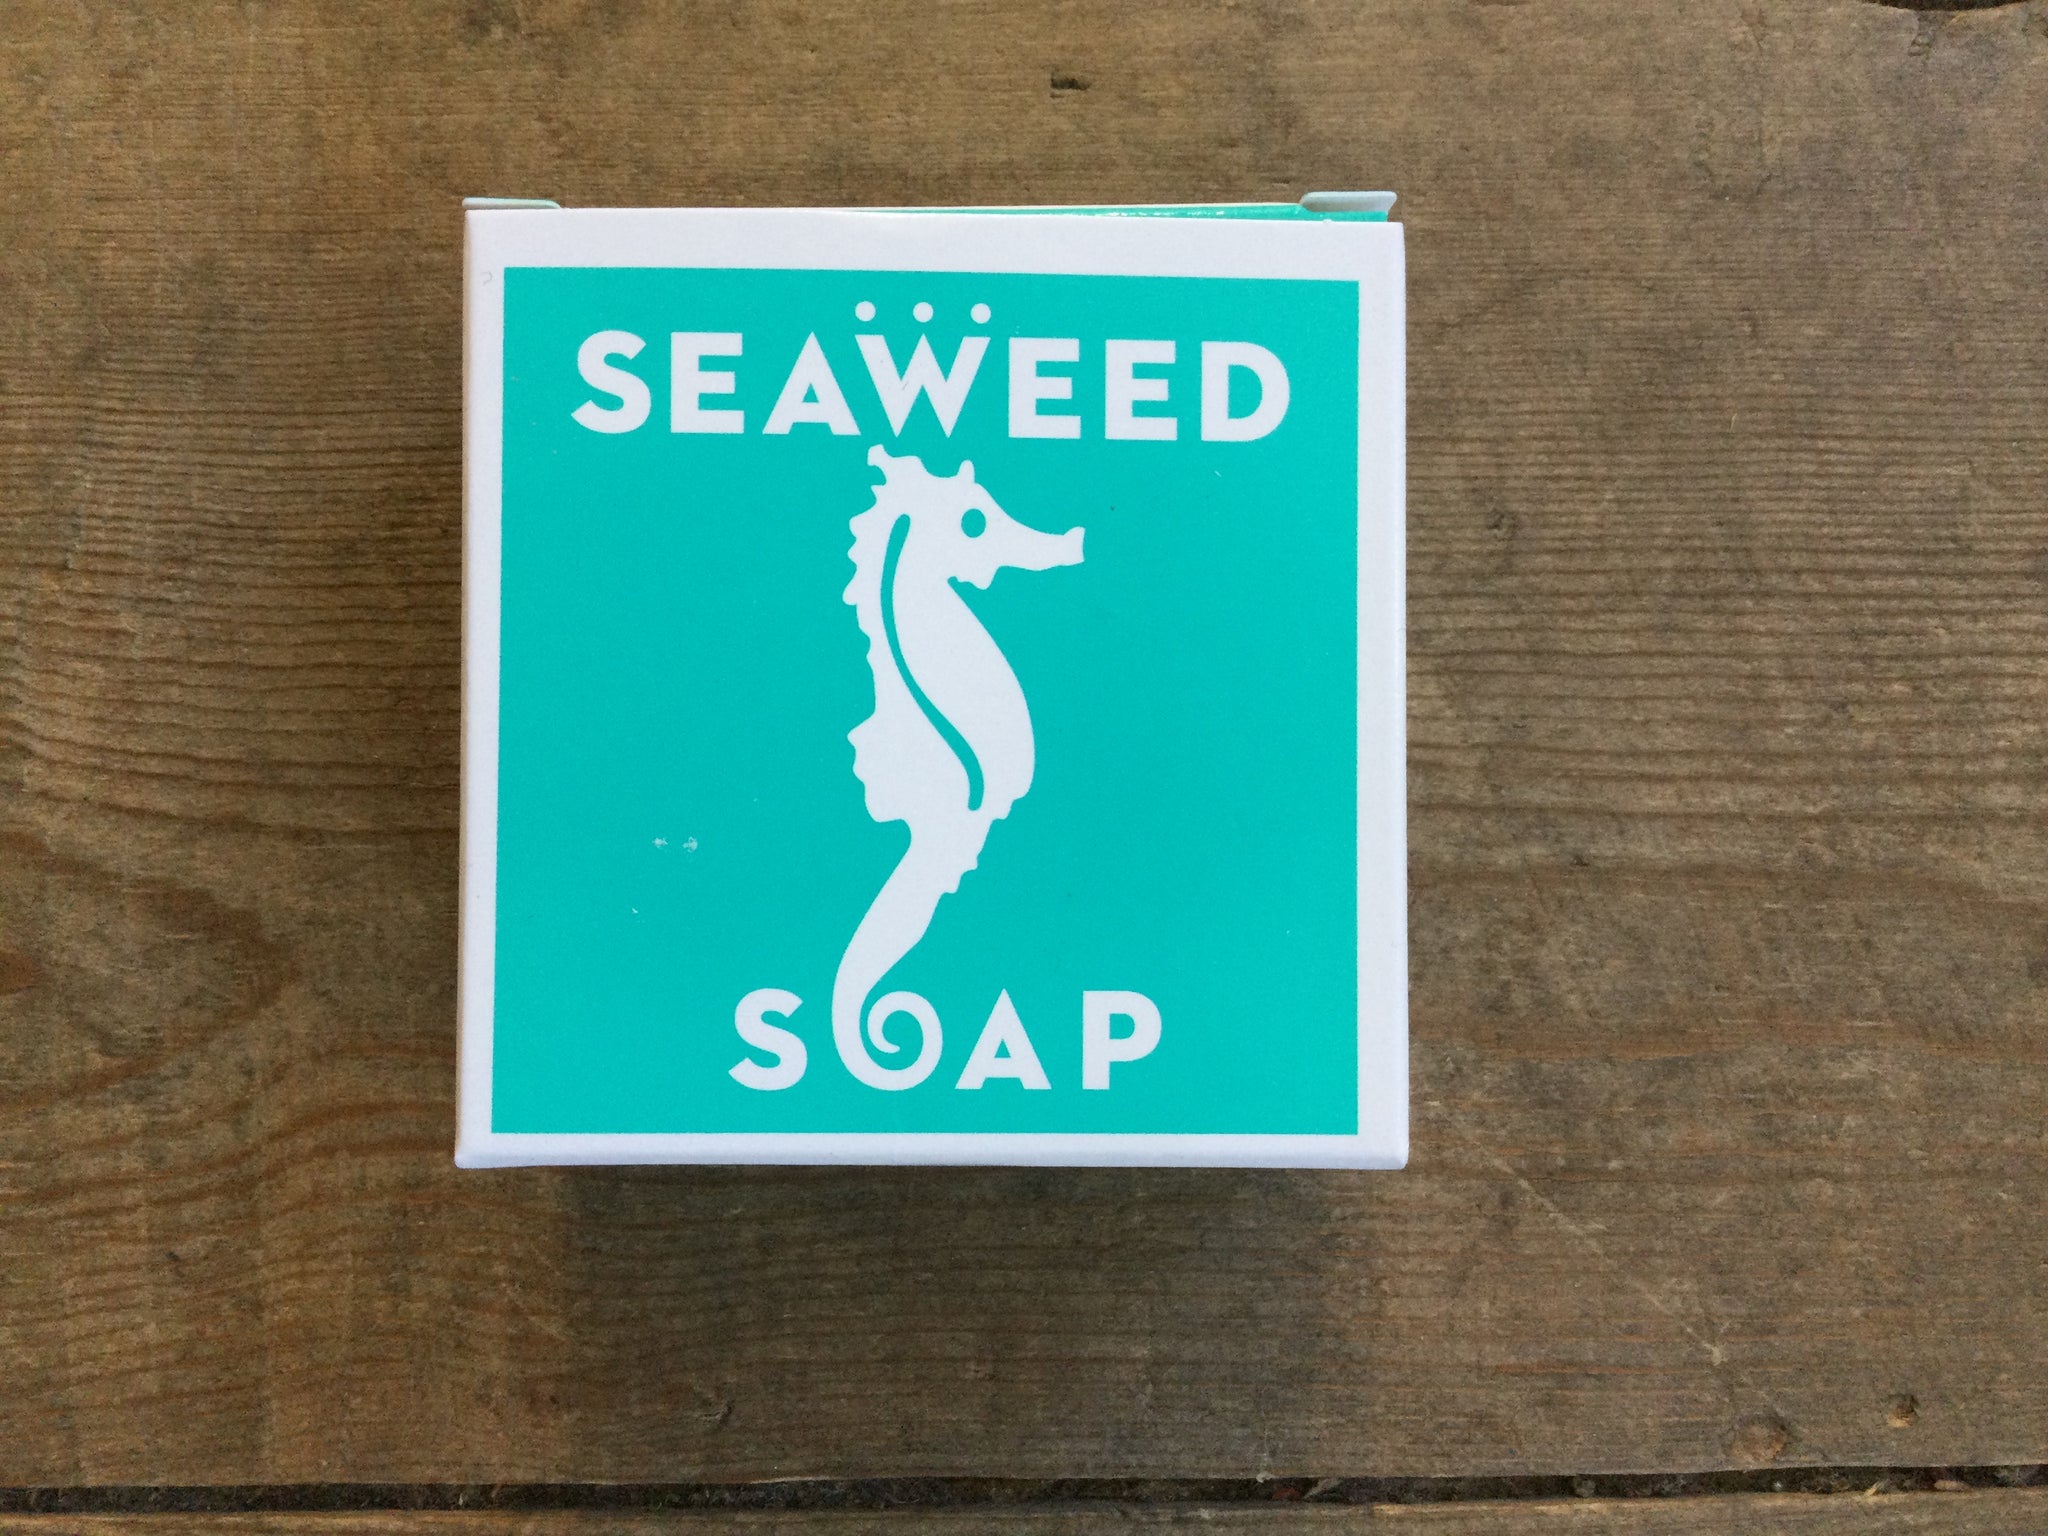 Swedish Dream Seaweed Soap